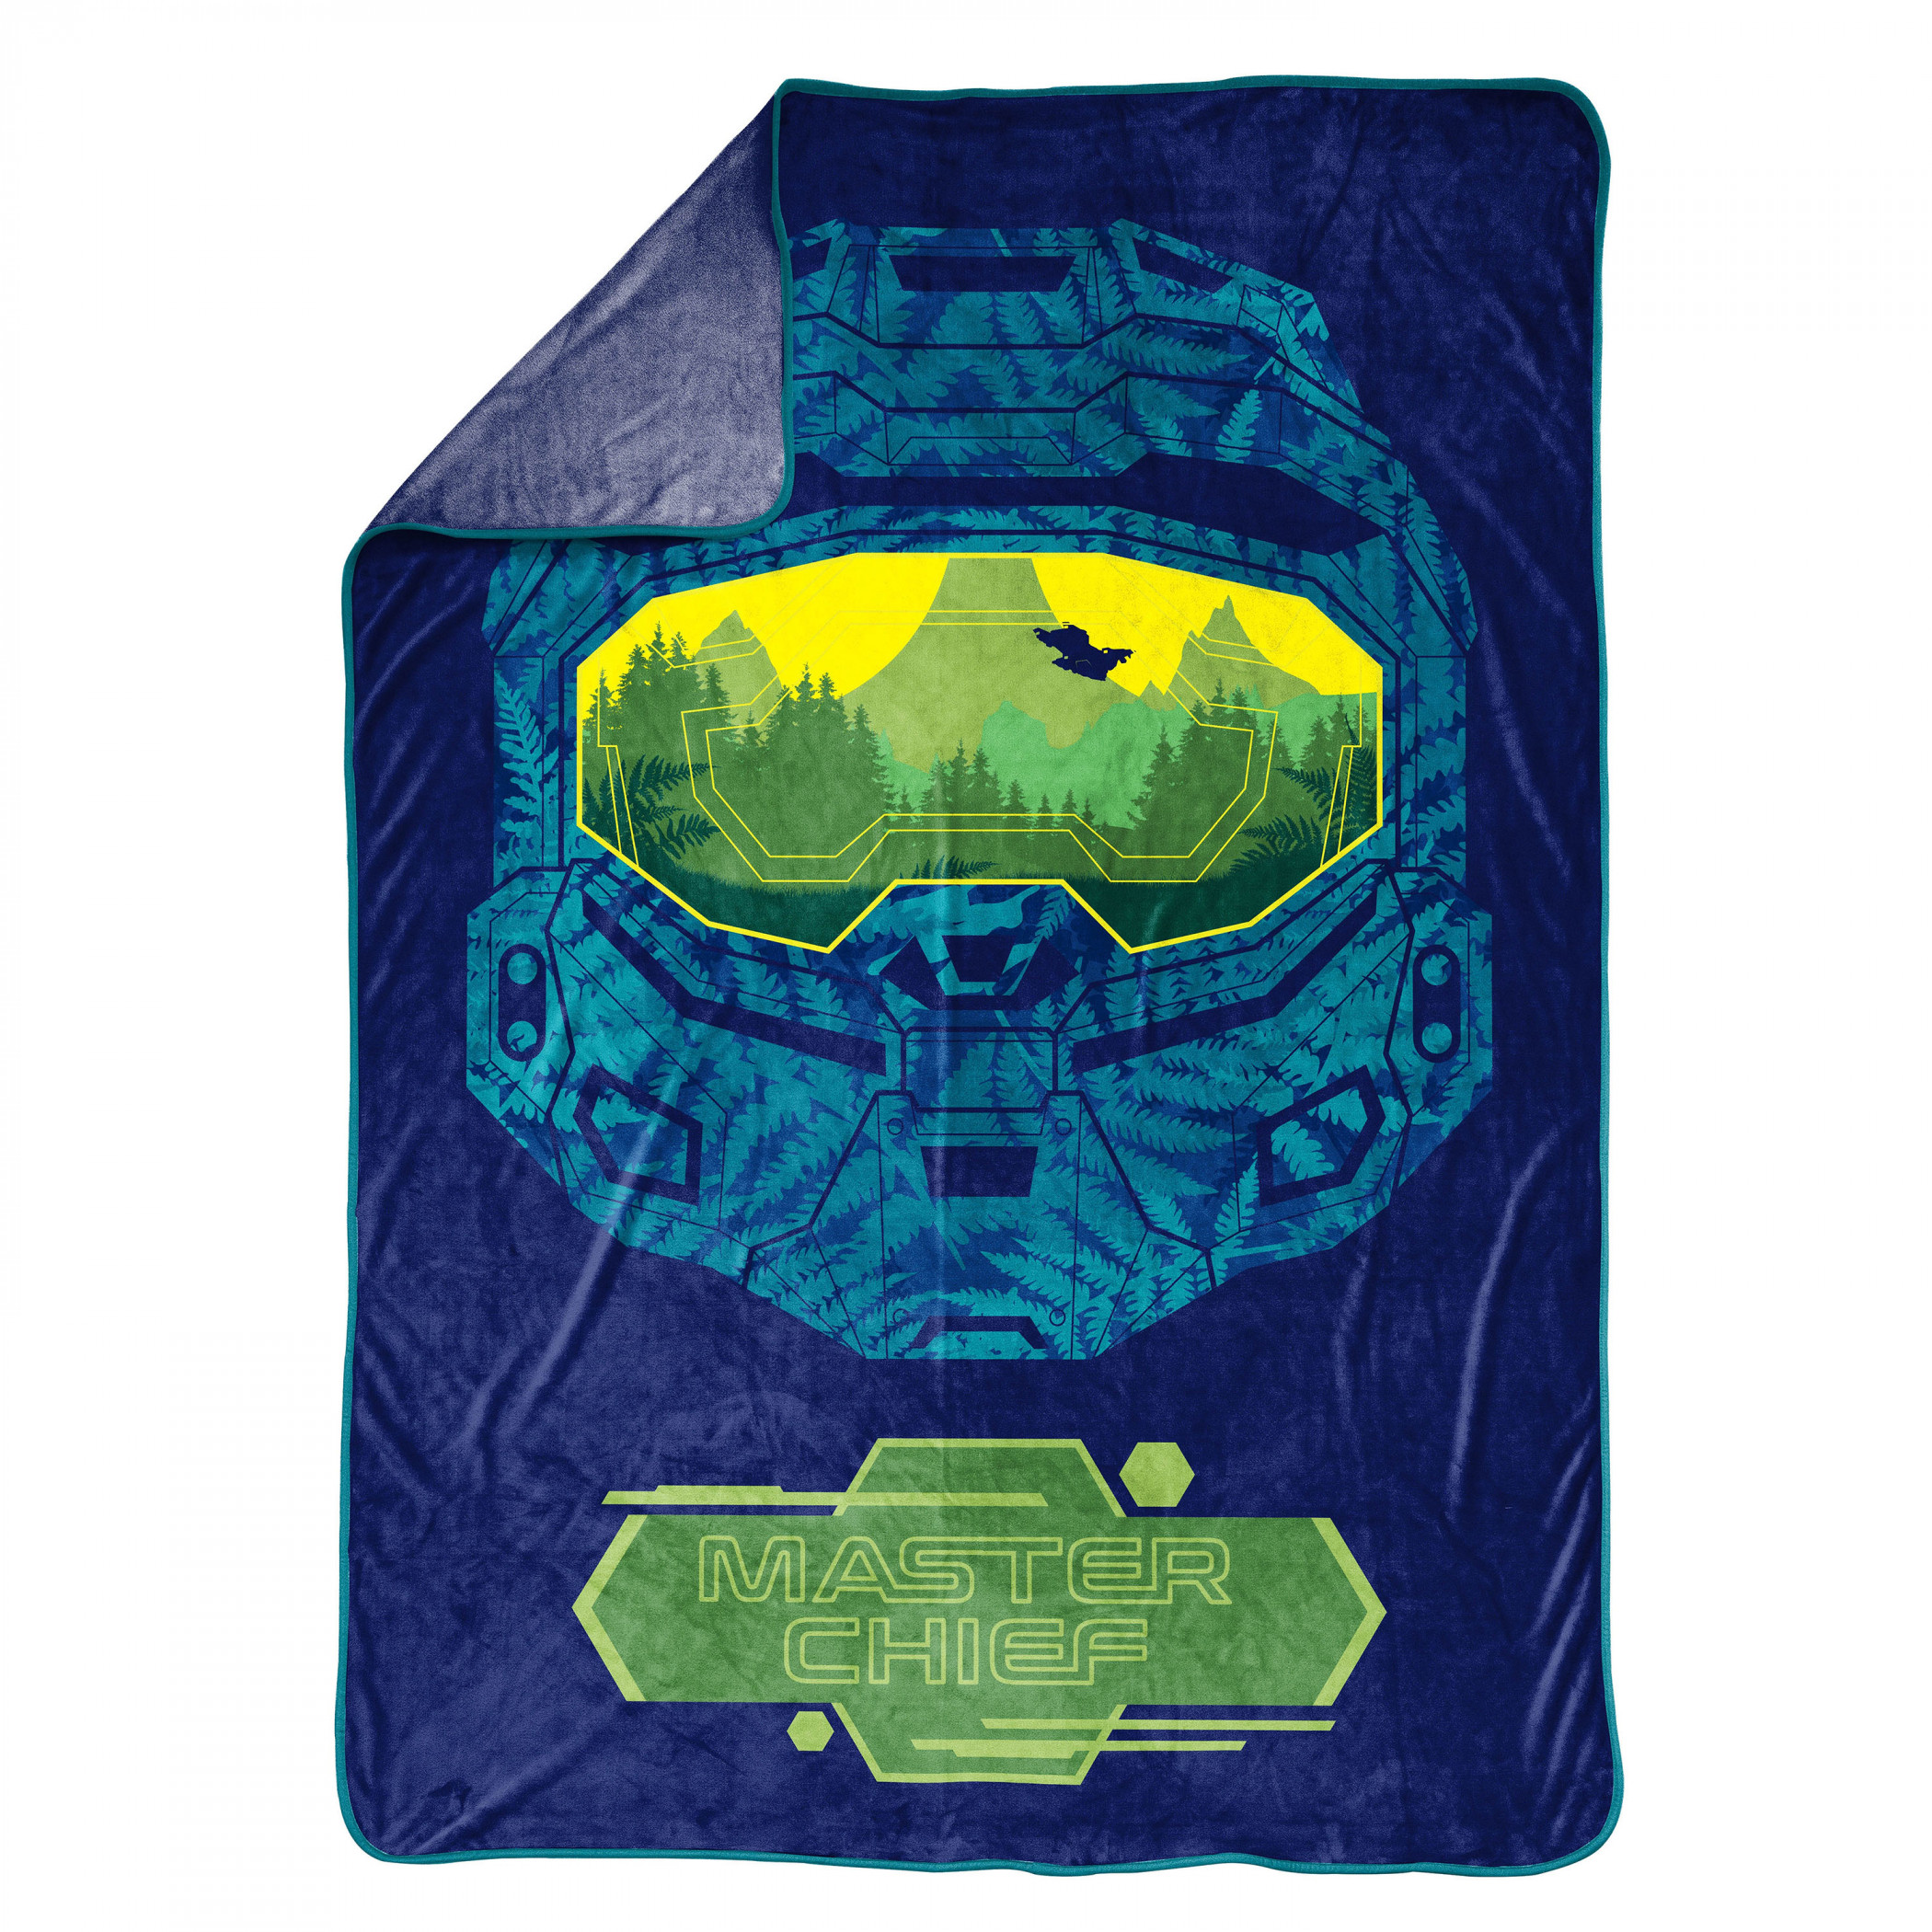 Halo Infinite Master Chief Throw Blanket